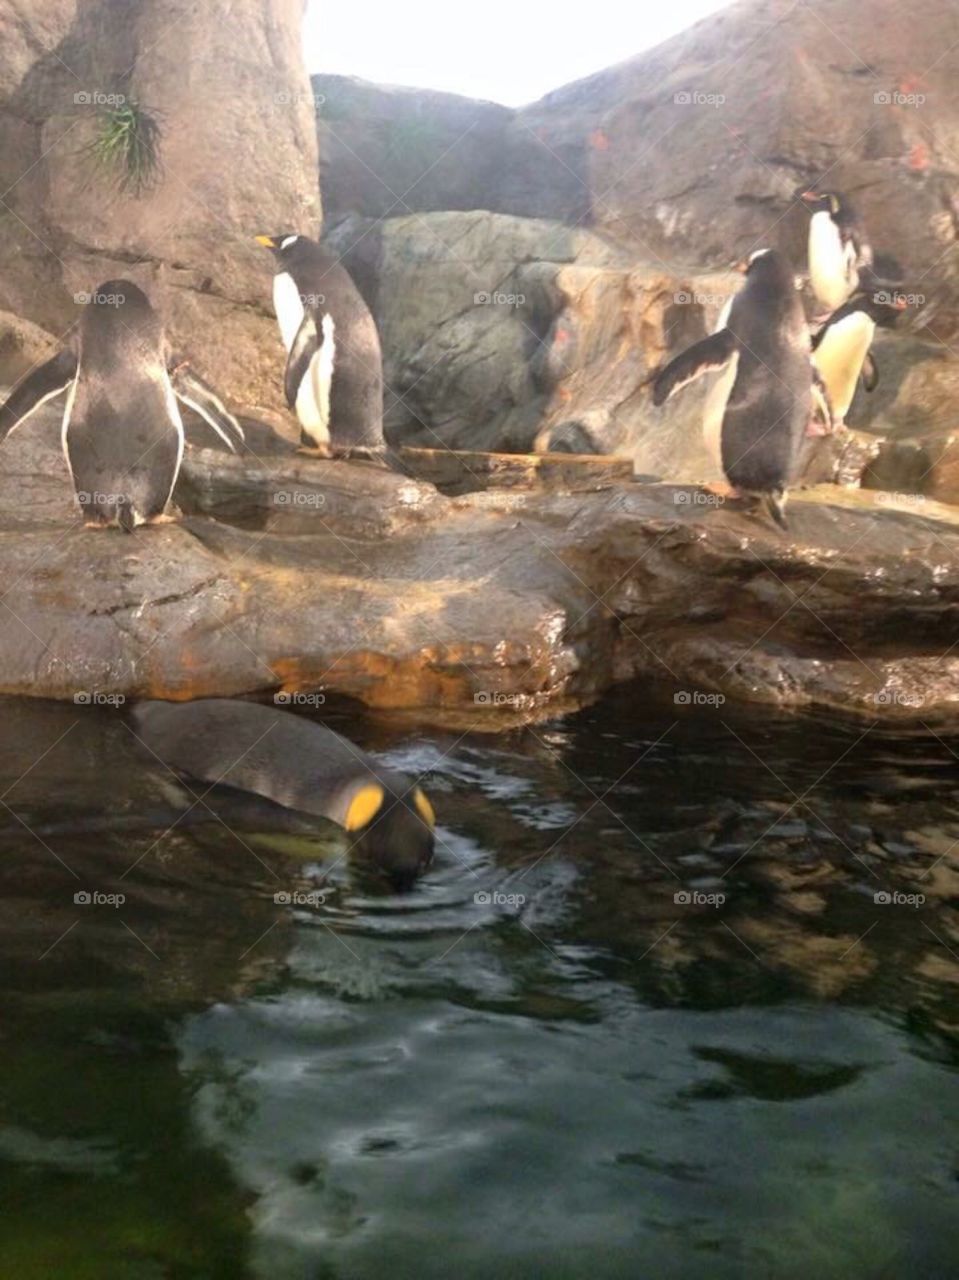 Swimming penguin 